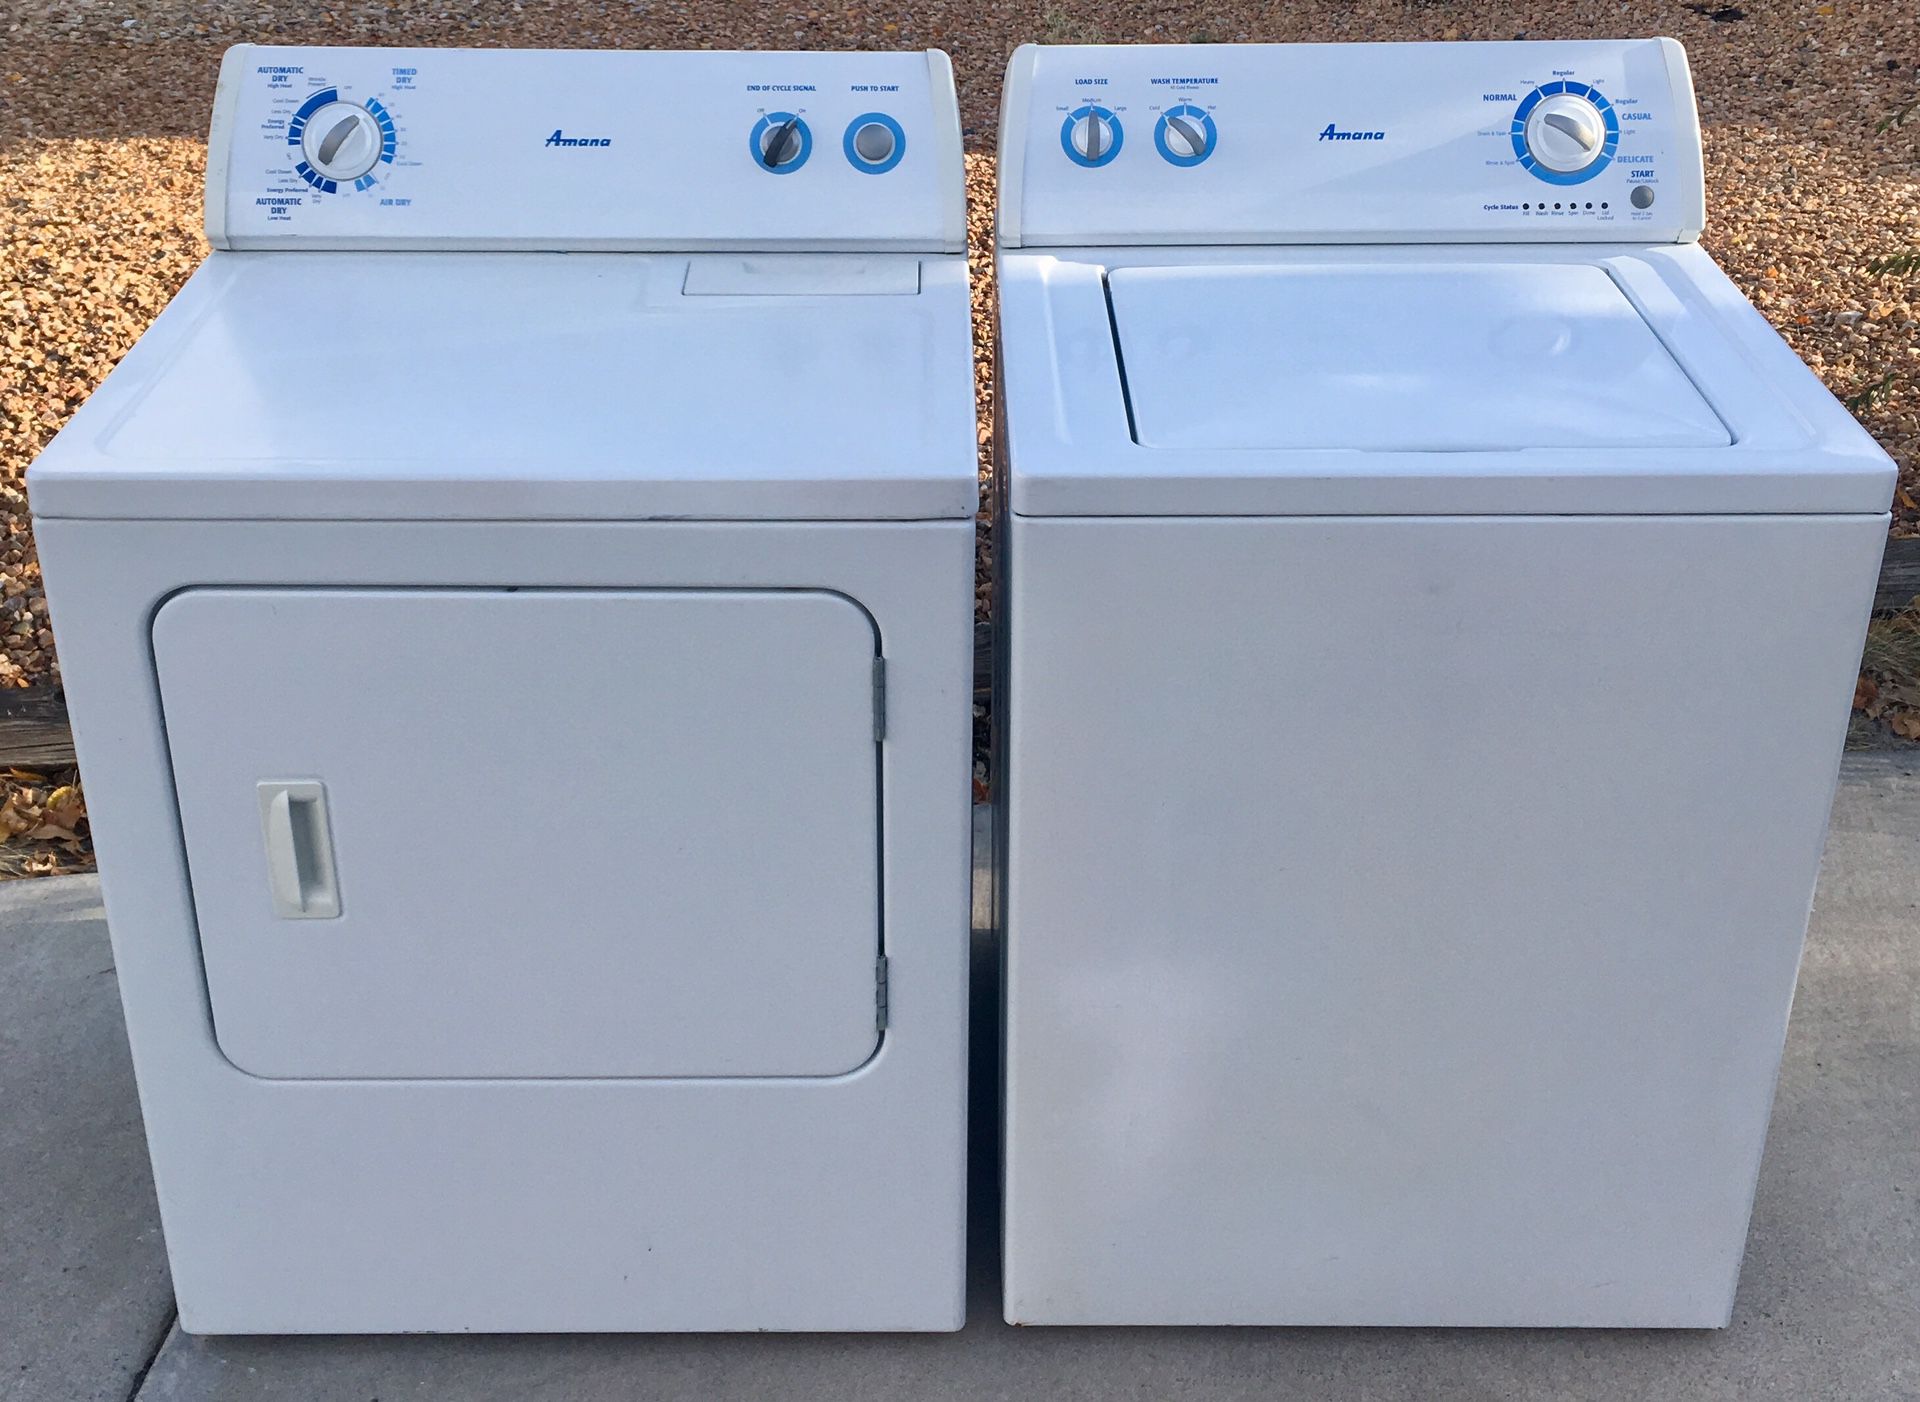 Amana Washer & Electric Dryer Matching Set